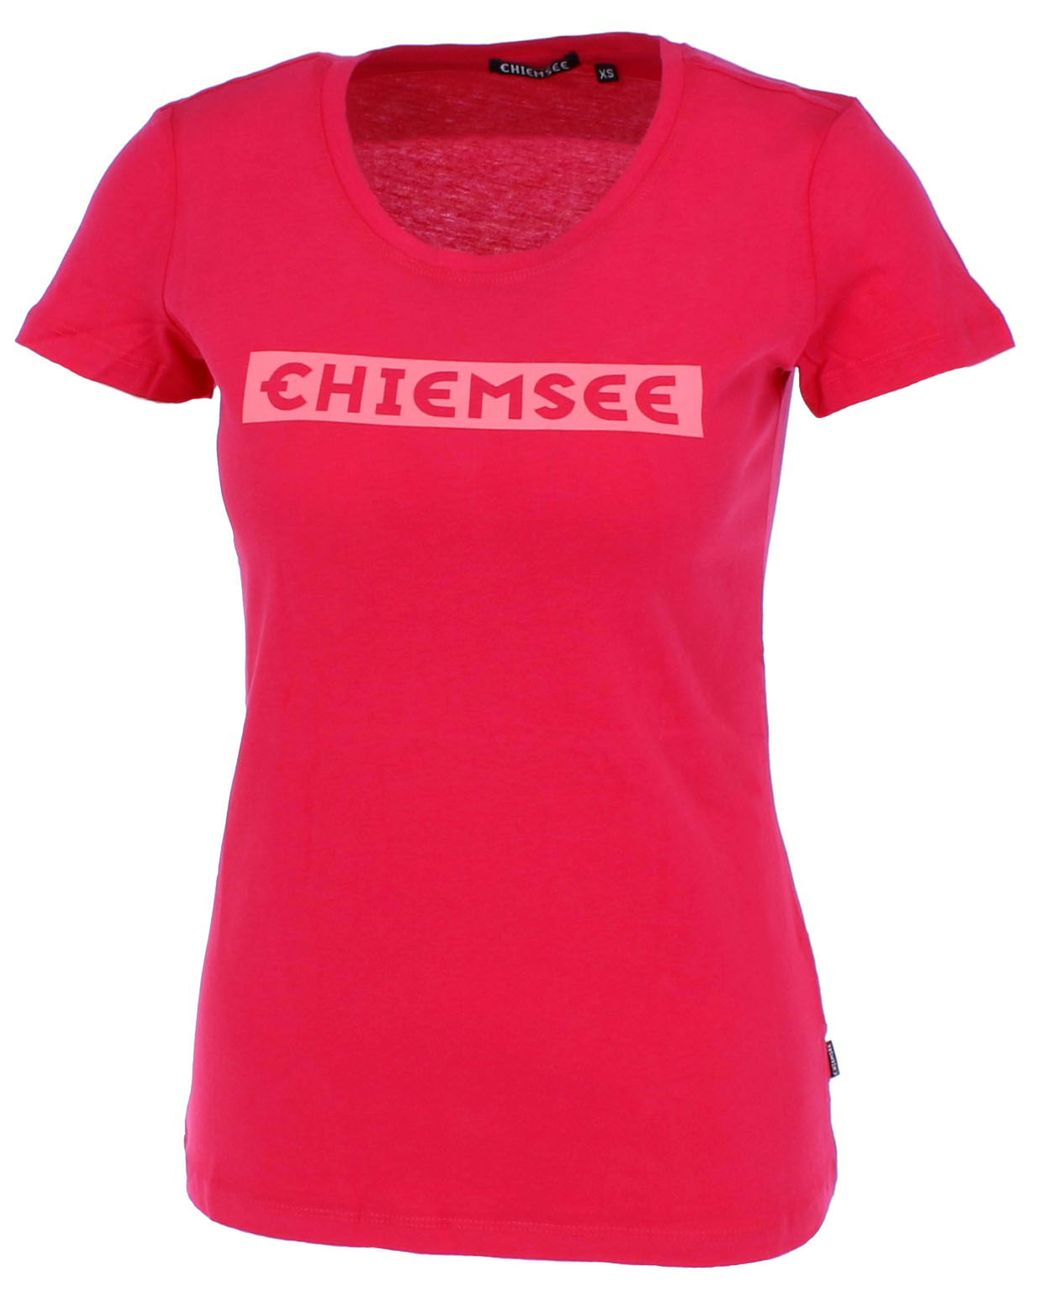 CHIEMSEE Damen T-Shirt Blockprint 13191201 - Chiemsee - SAGATOO - 4054583315378